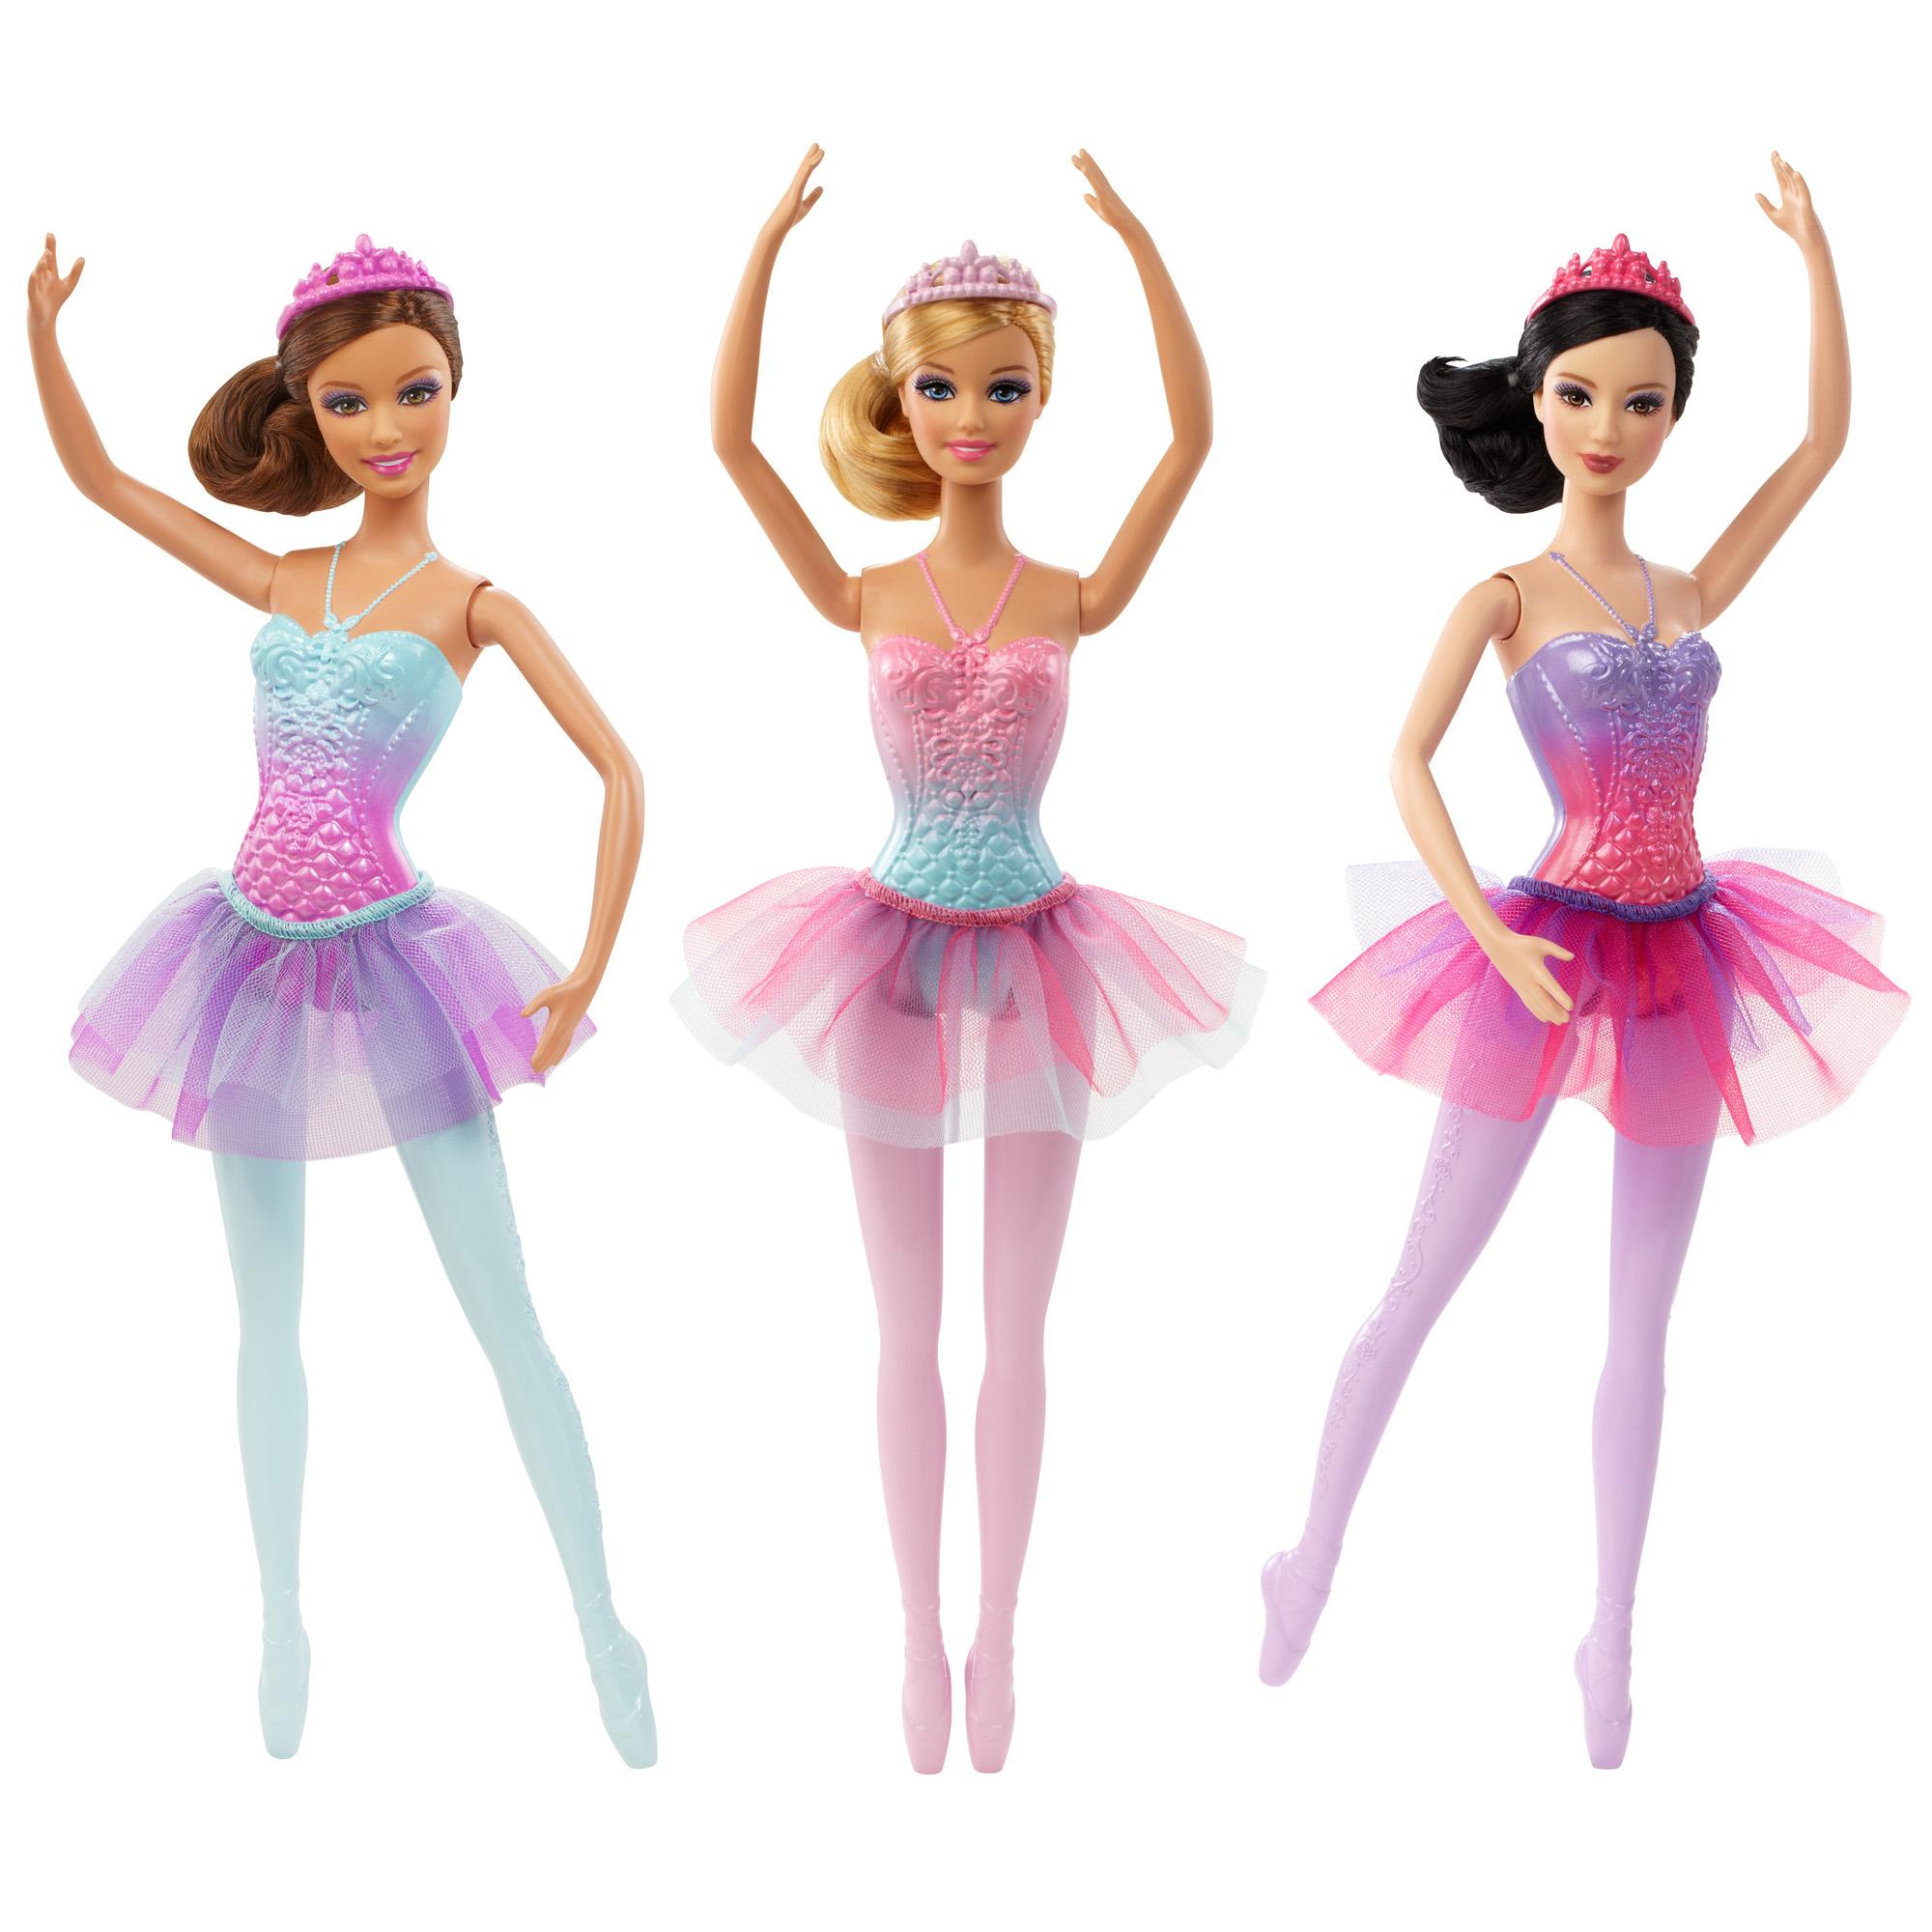 Barbie ballerina doll.